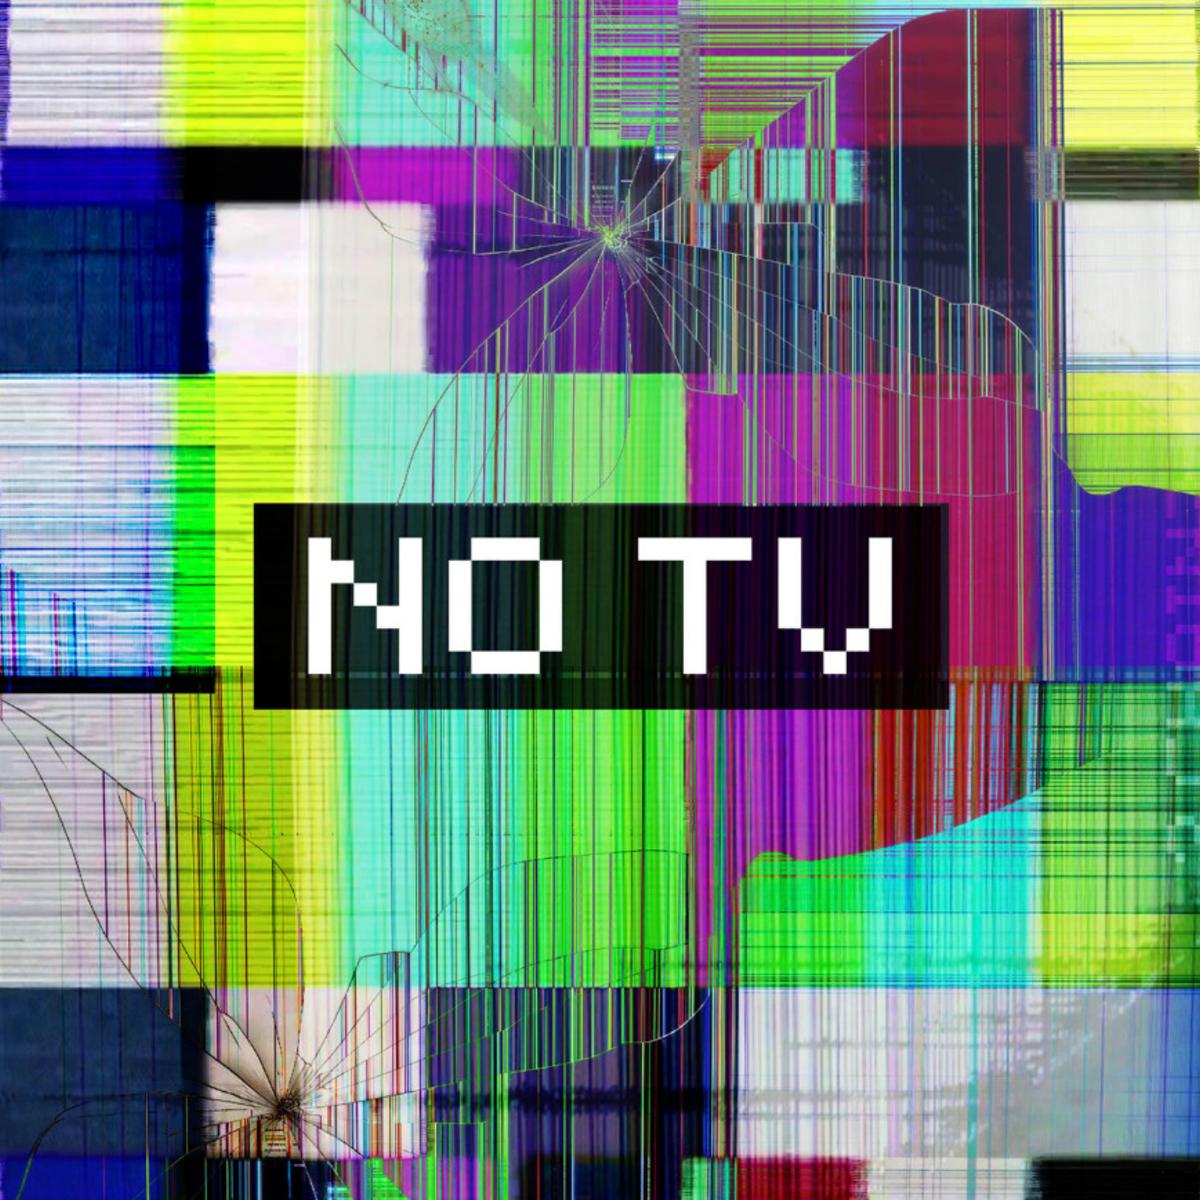 2 Chainz – “NO TV” [Audio]